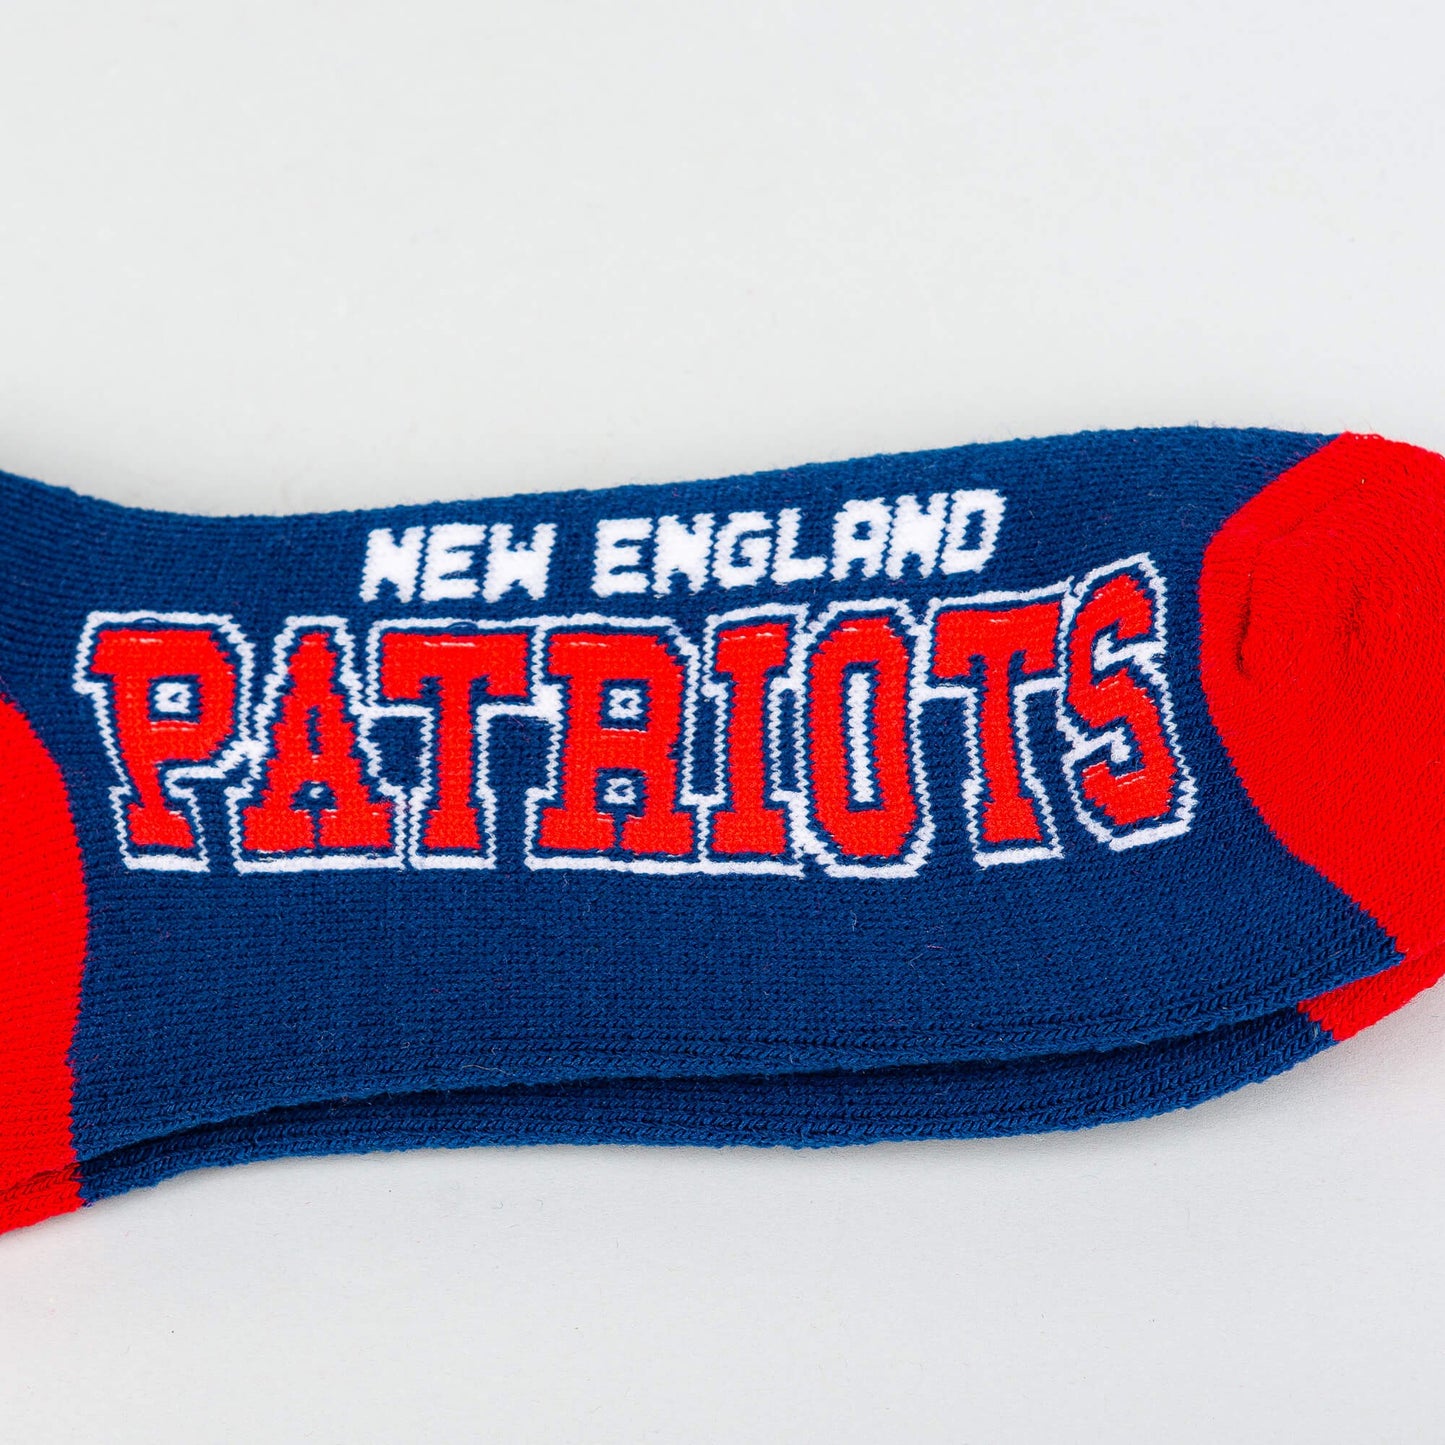 FBF Originals NFL Graphic 4-Stripe Deuce Socks New England Patriots